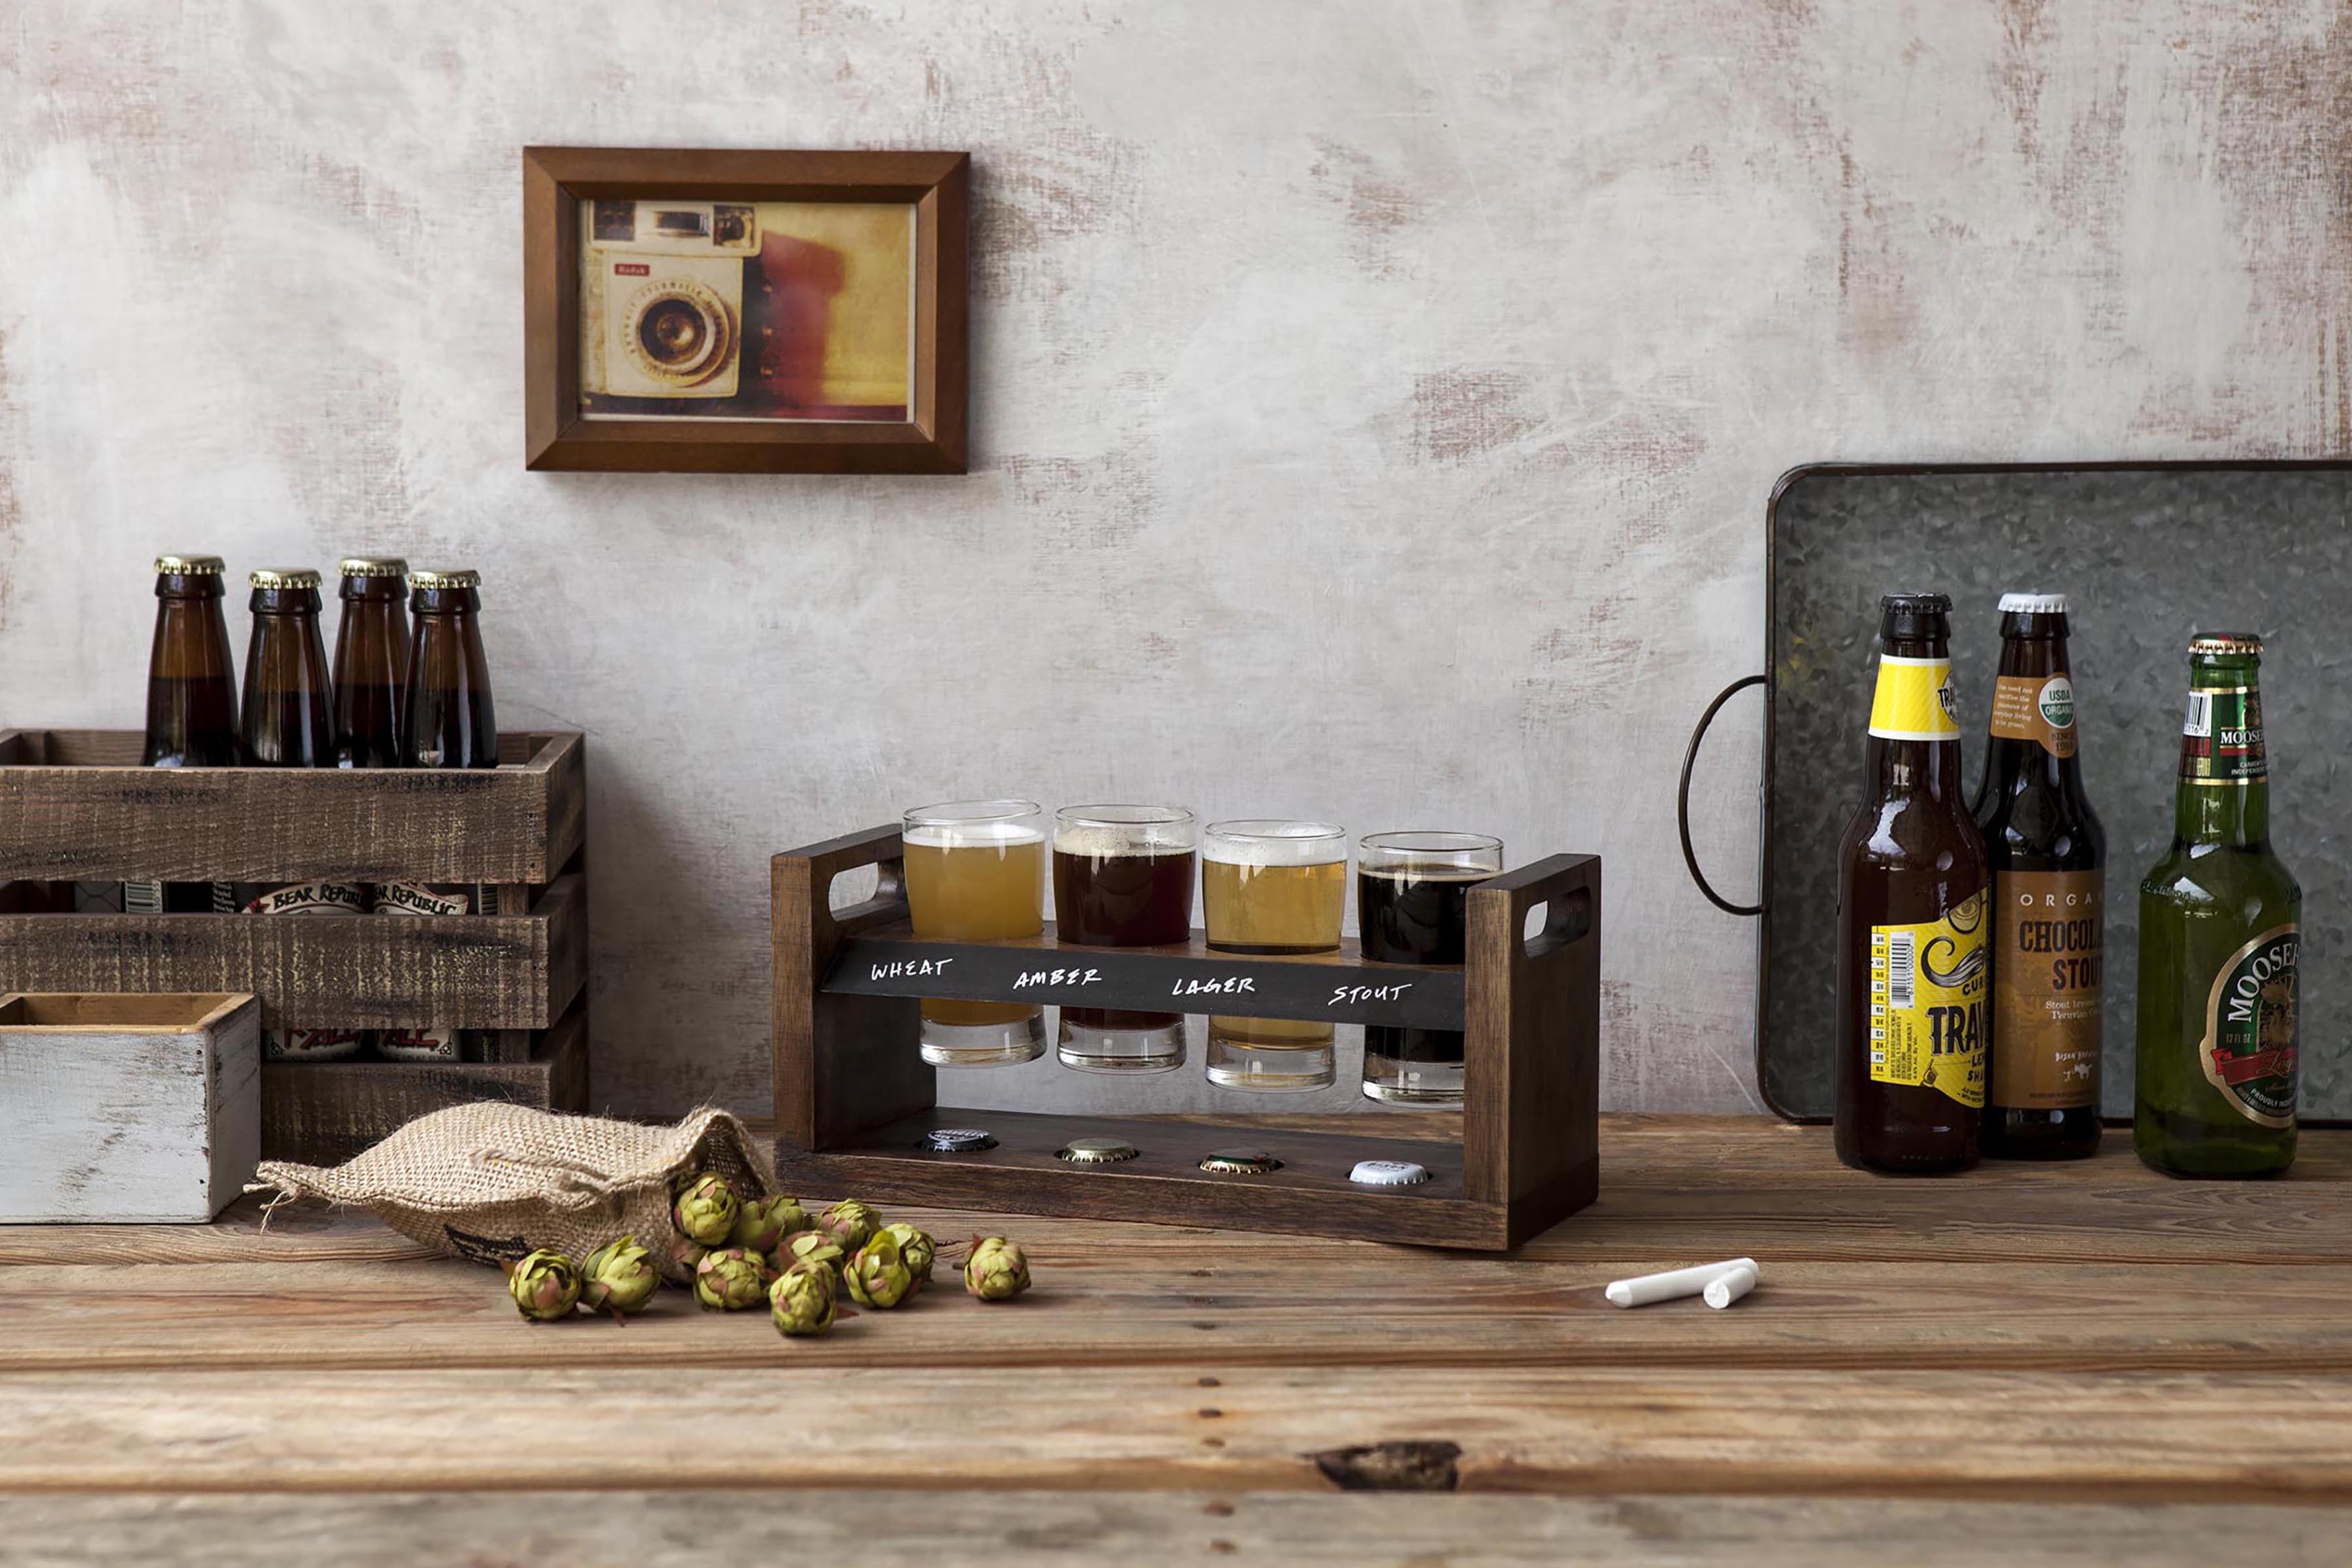 Pittsburgh Pirates - Craft Beer Flight Beverage Sampler